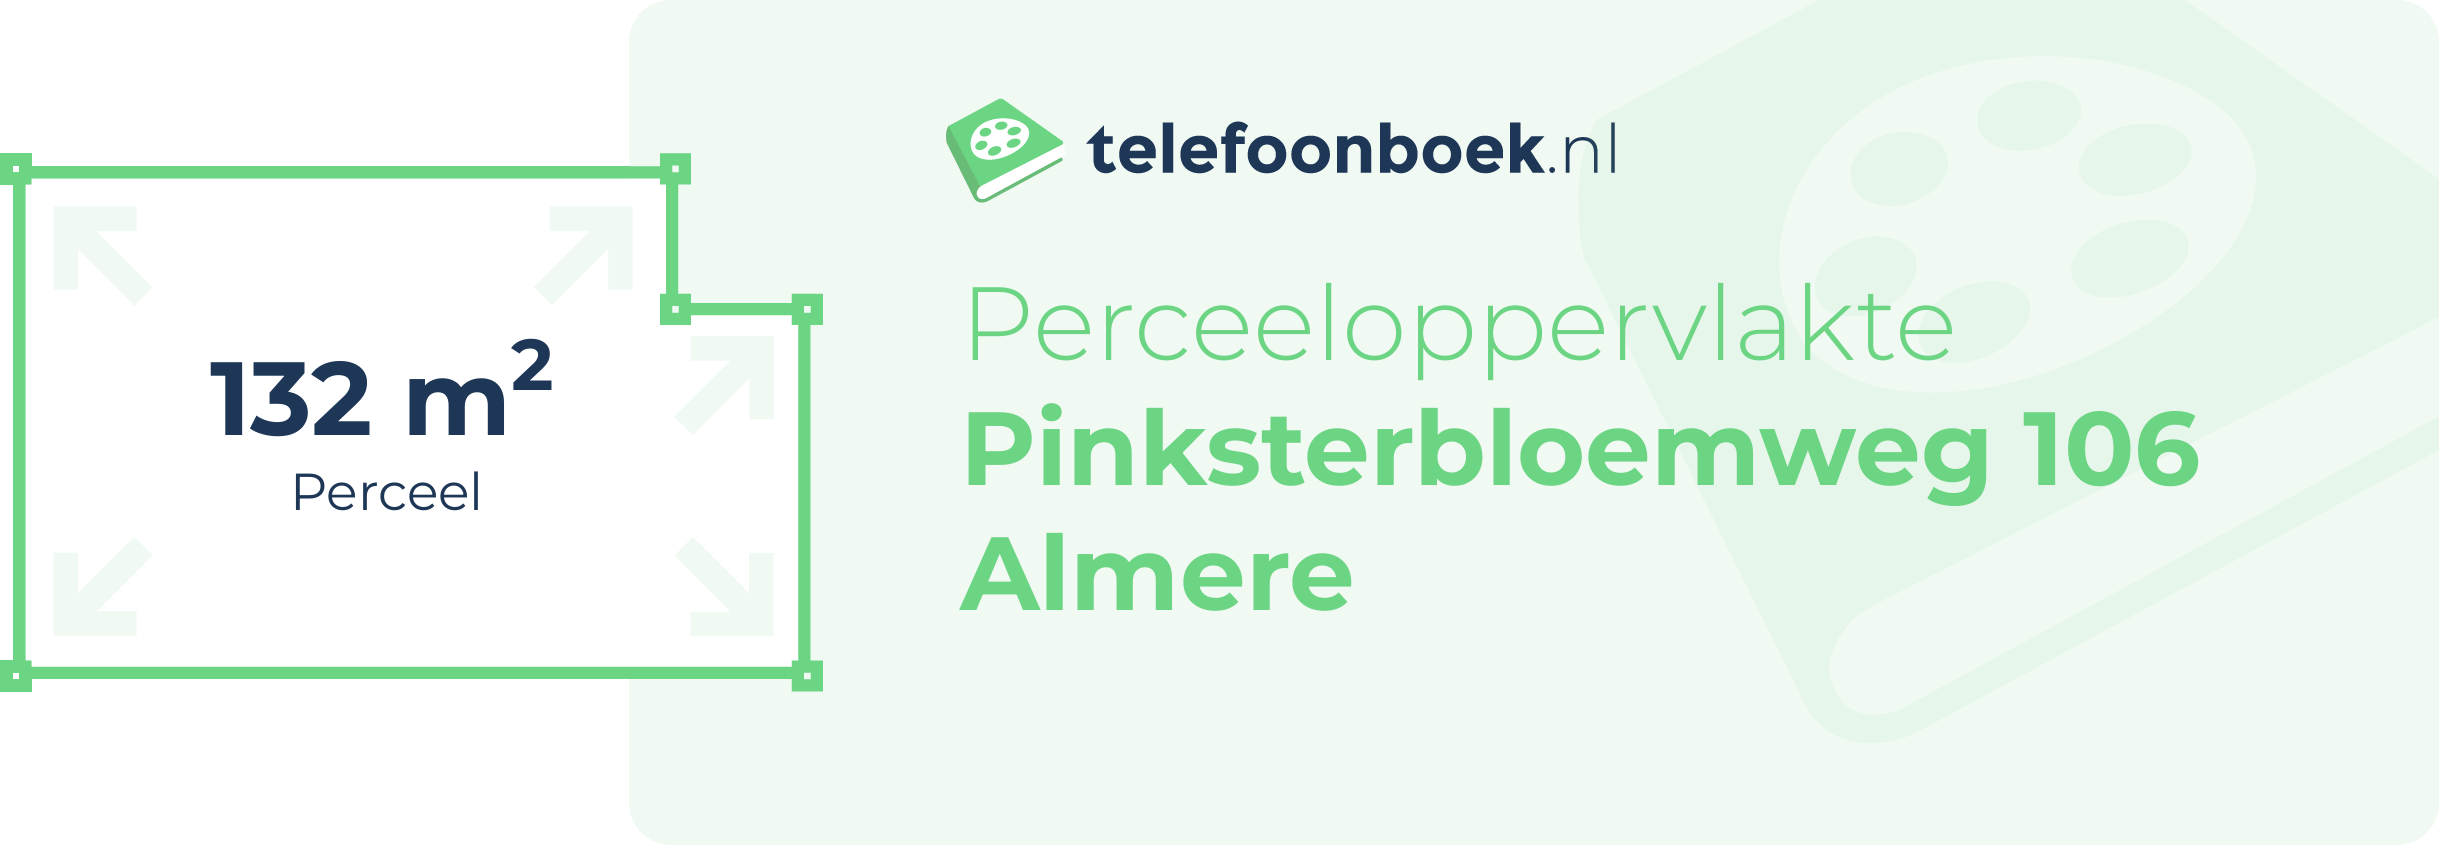 Perceeloppervlakte Pinksterbloemweg 106 Almere